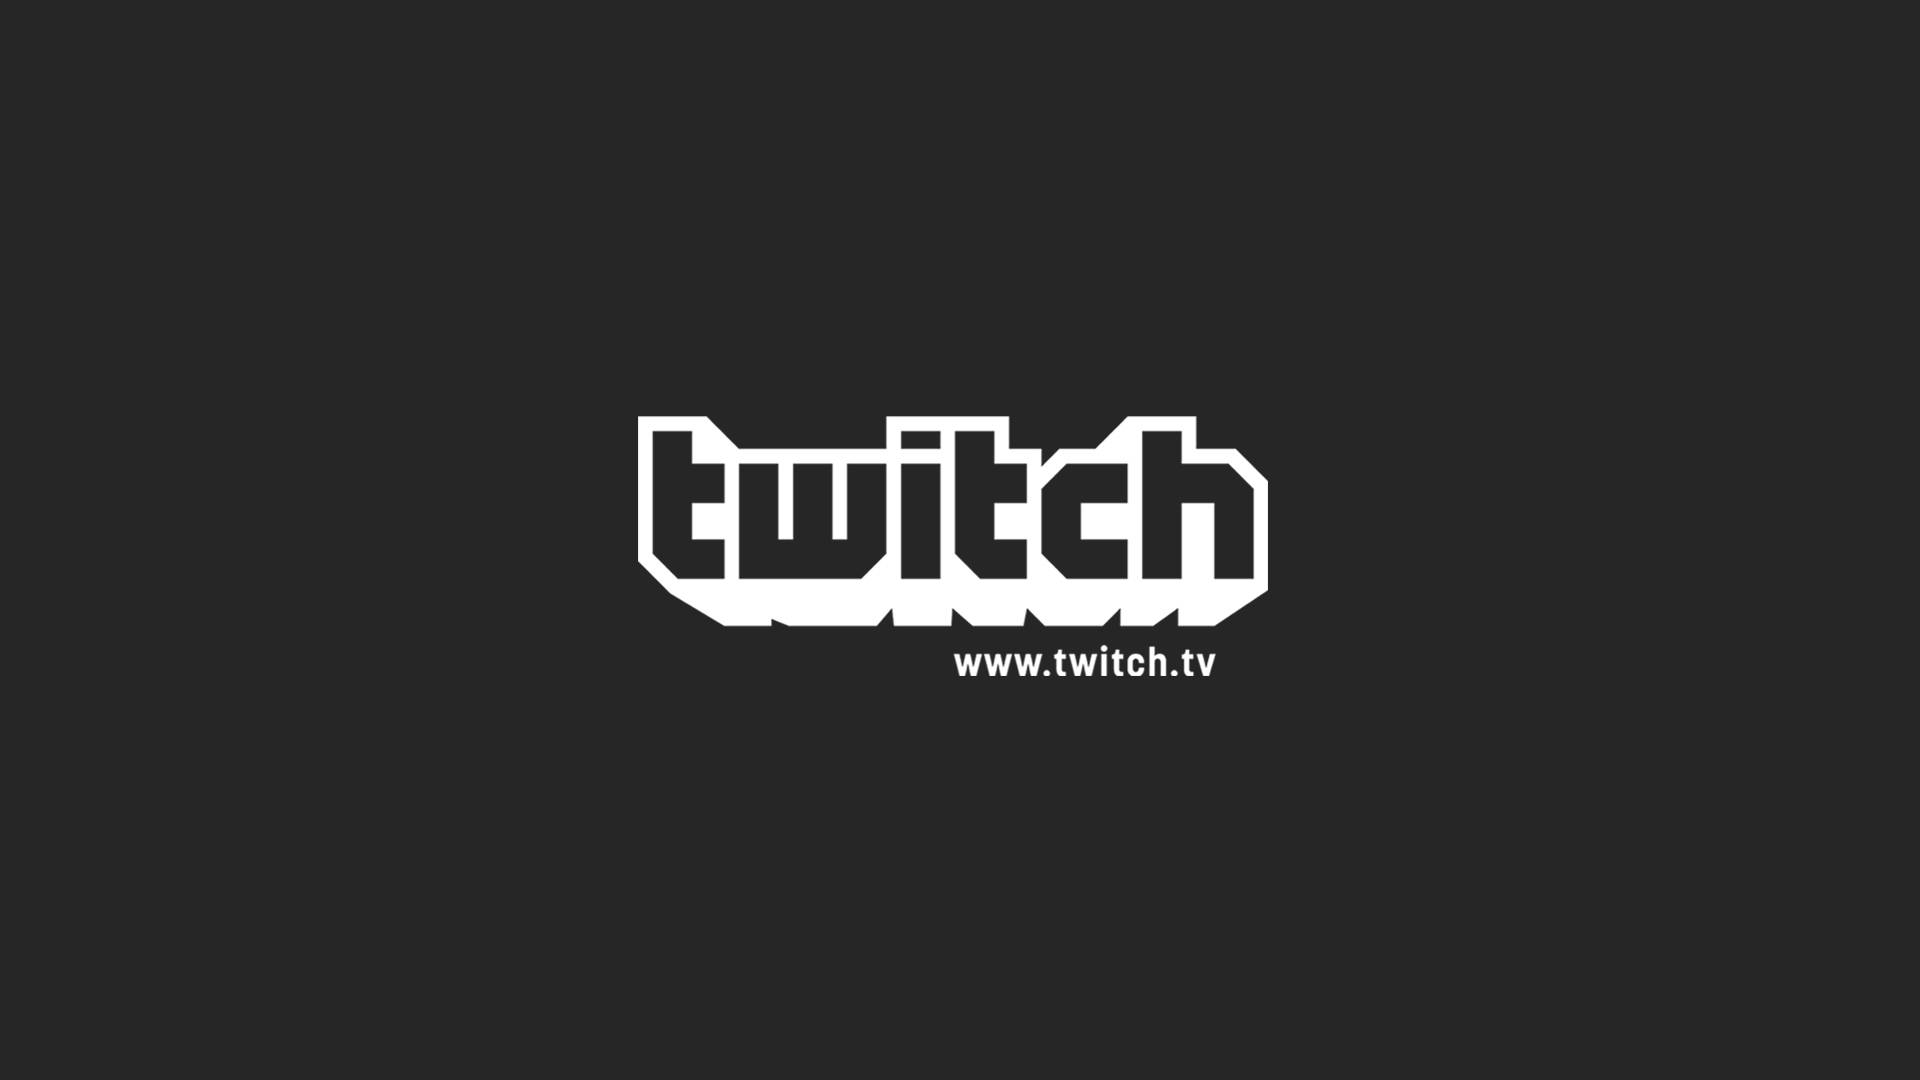 Twitch Black Wordmark Logo Background